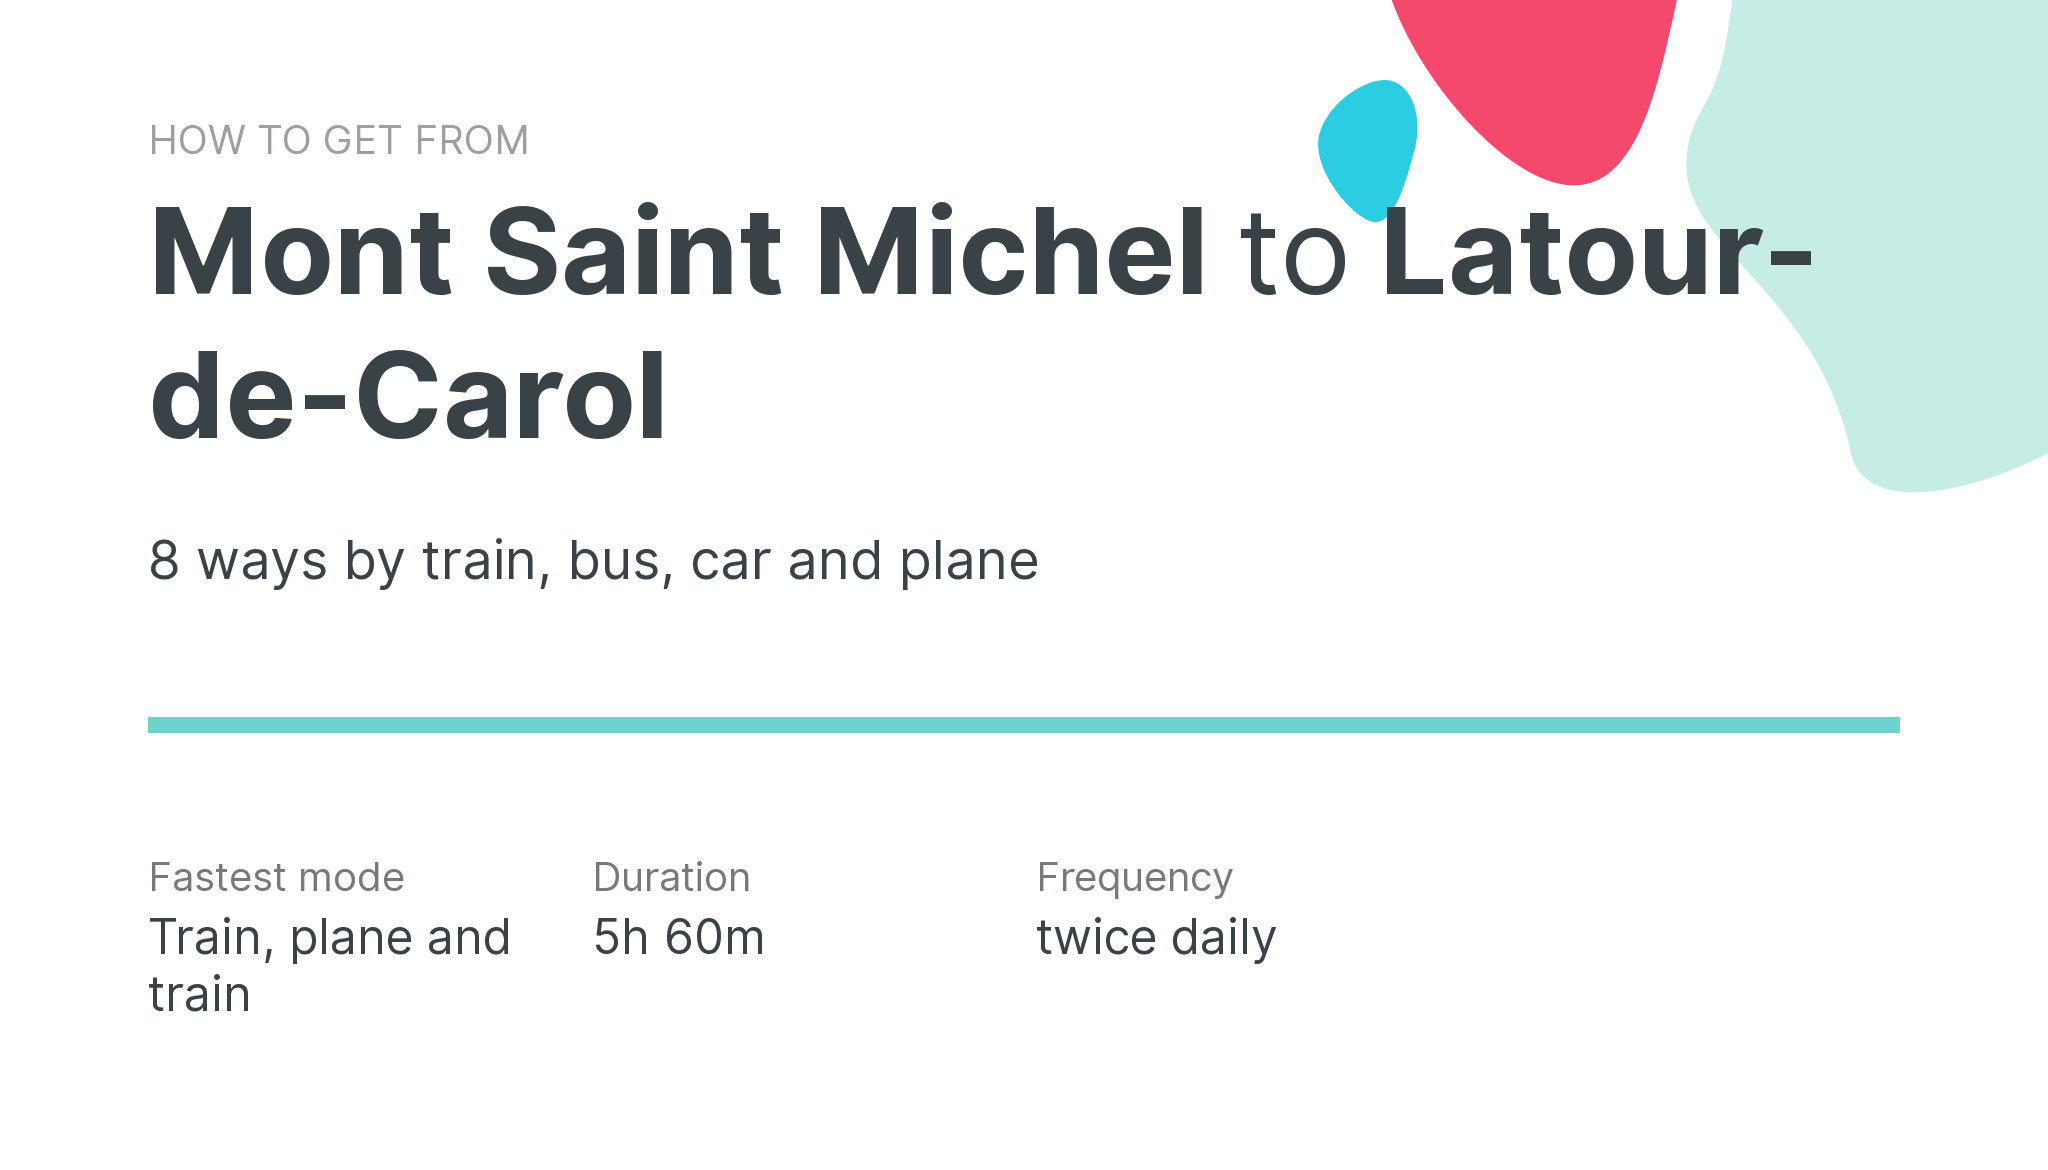 How do I get from Mont Saint Michel to Latour-de-Carol